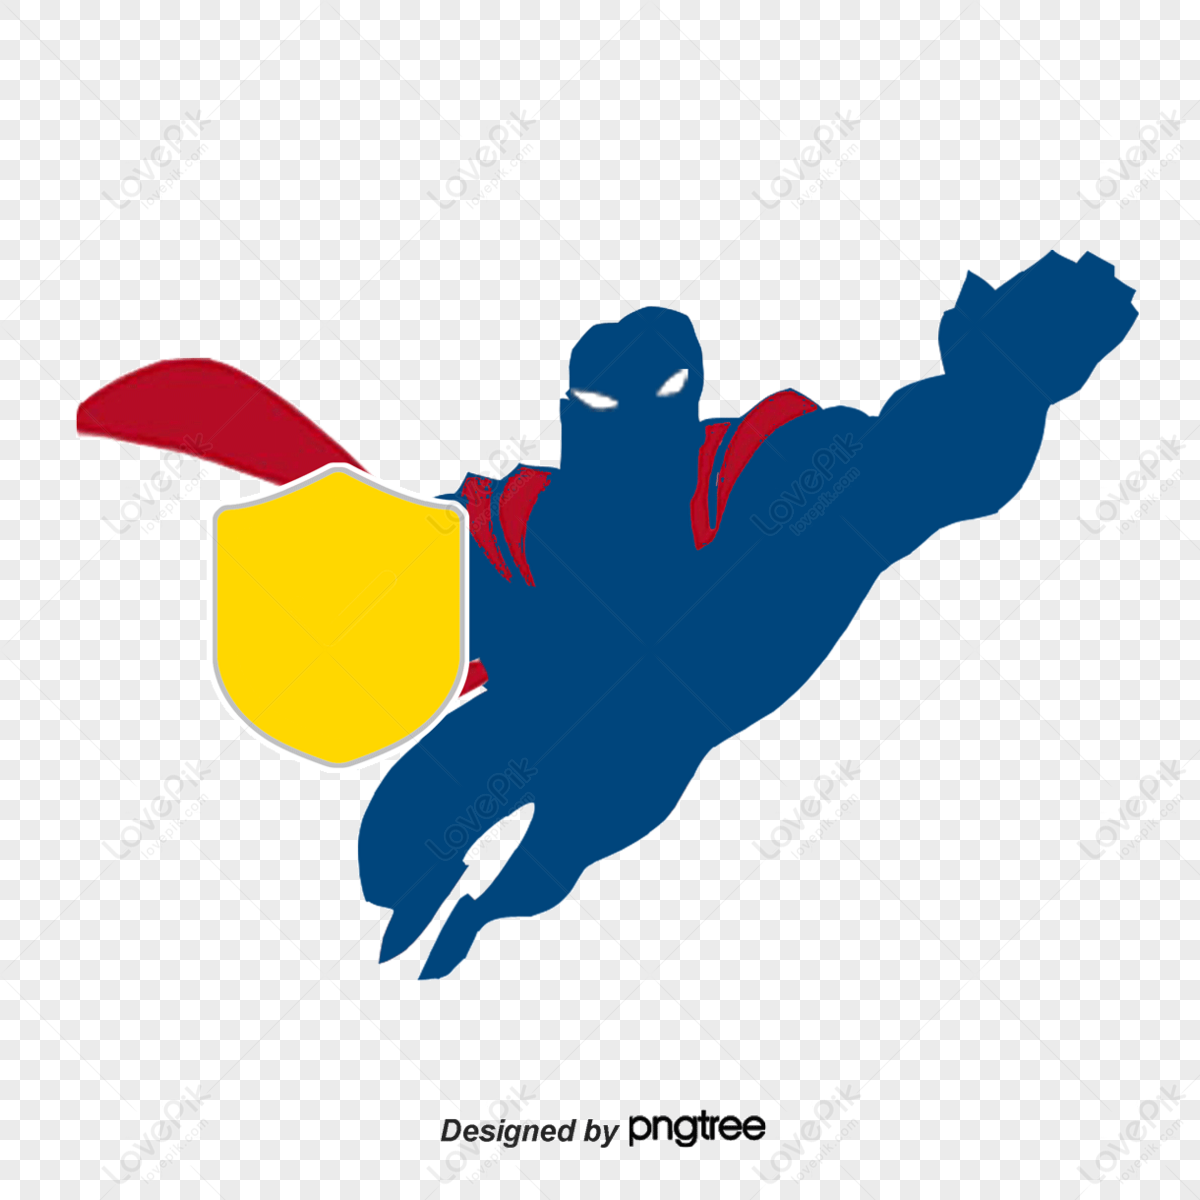 Superhero Background png download - 720*800 - Free Transparent